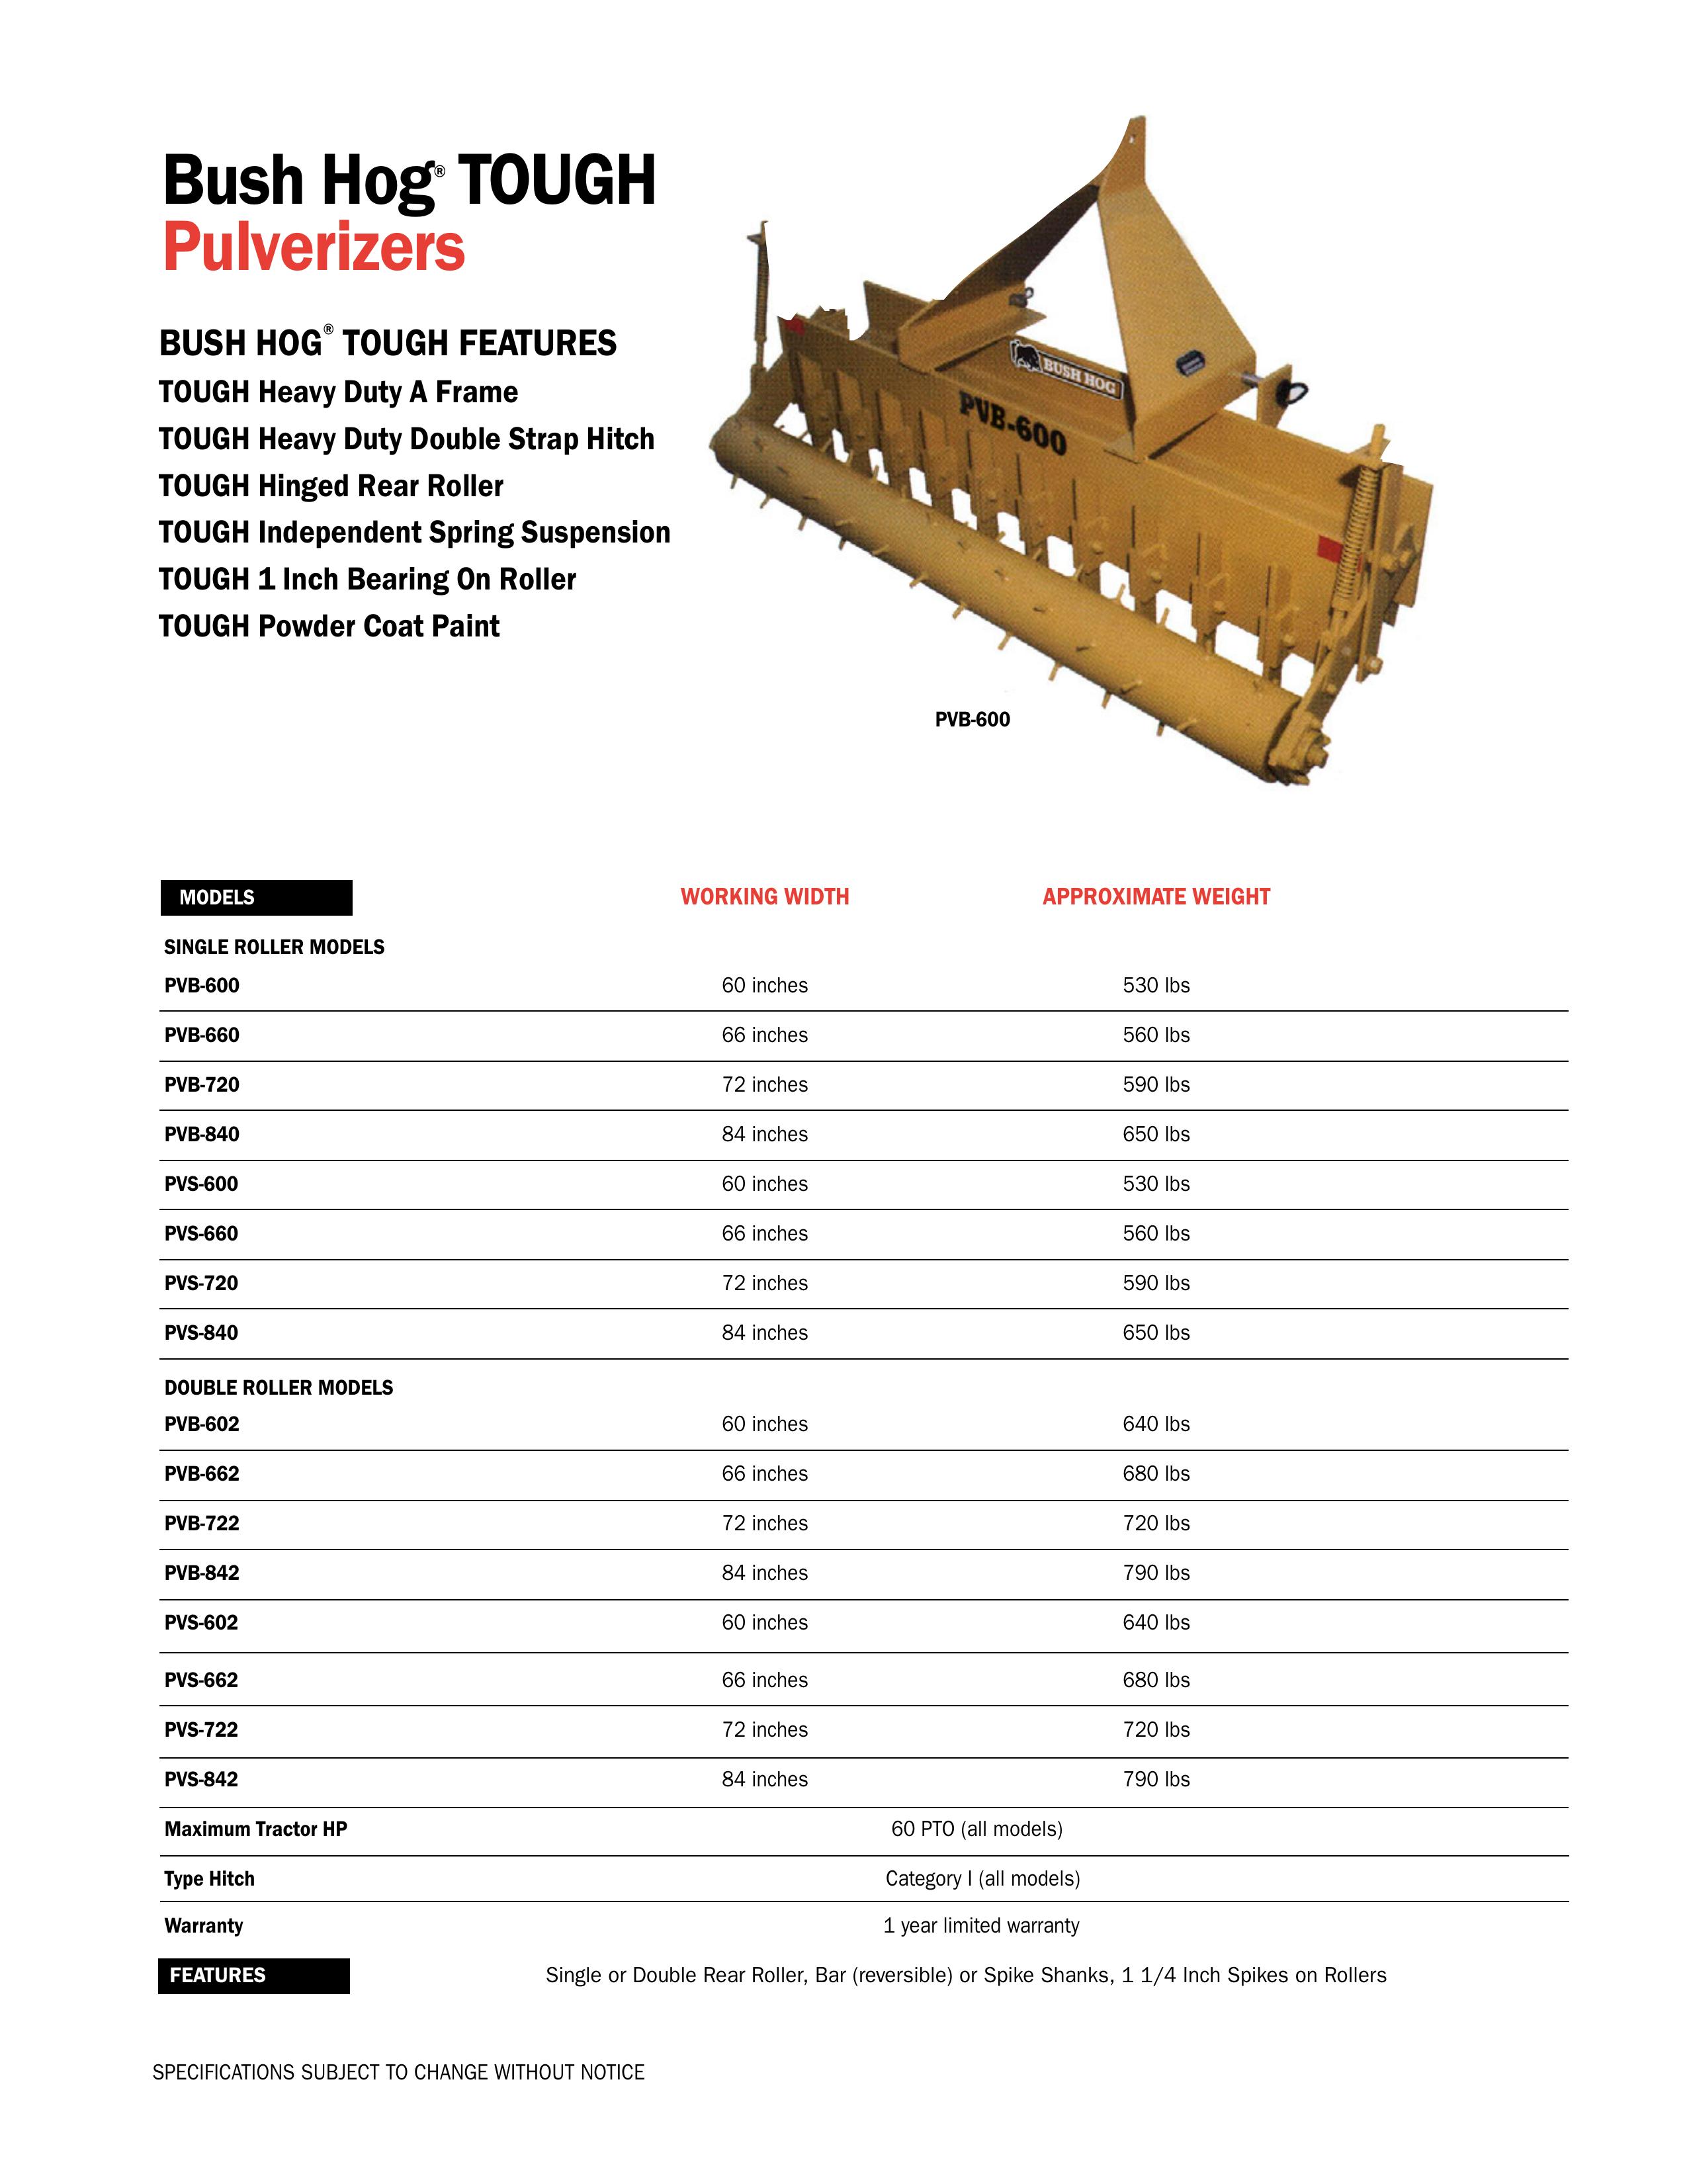 Bush Hog PVs-840 Lawn Aerator User Manual